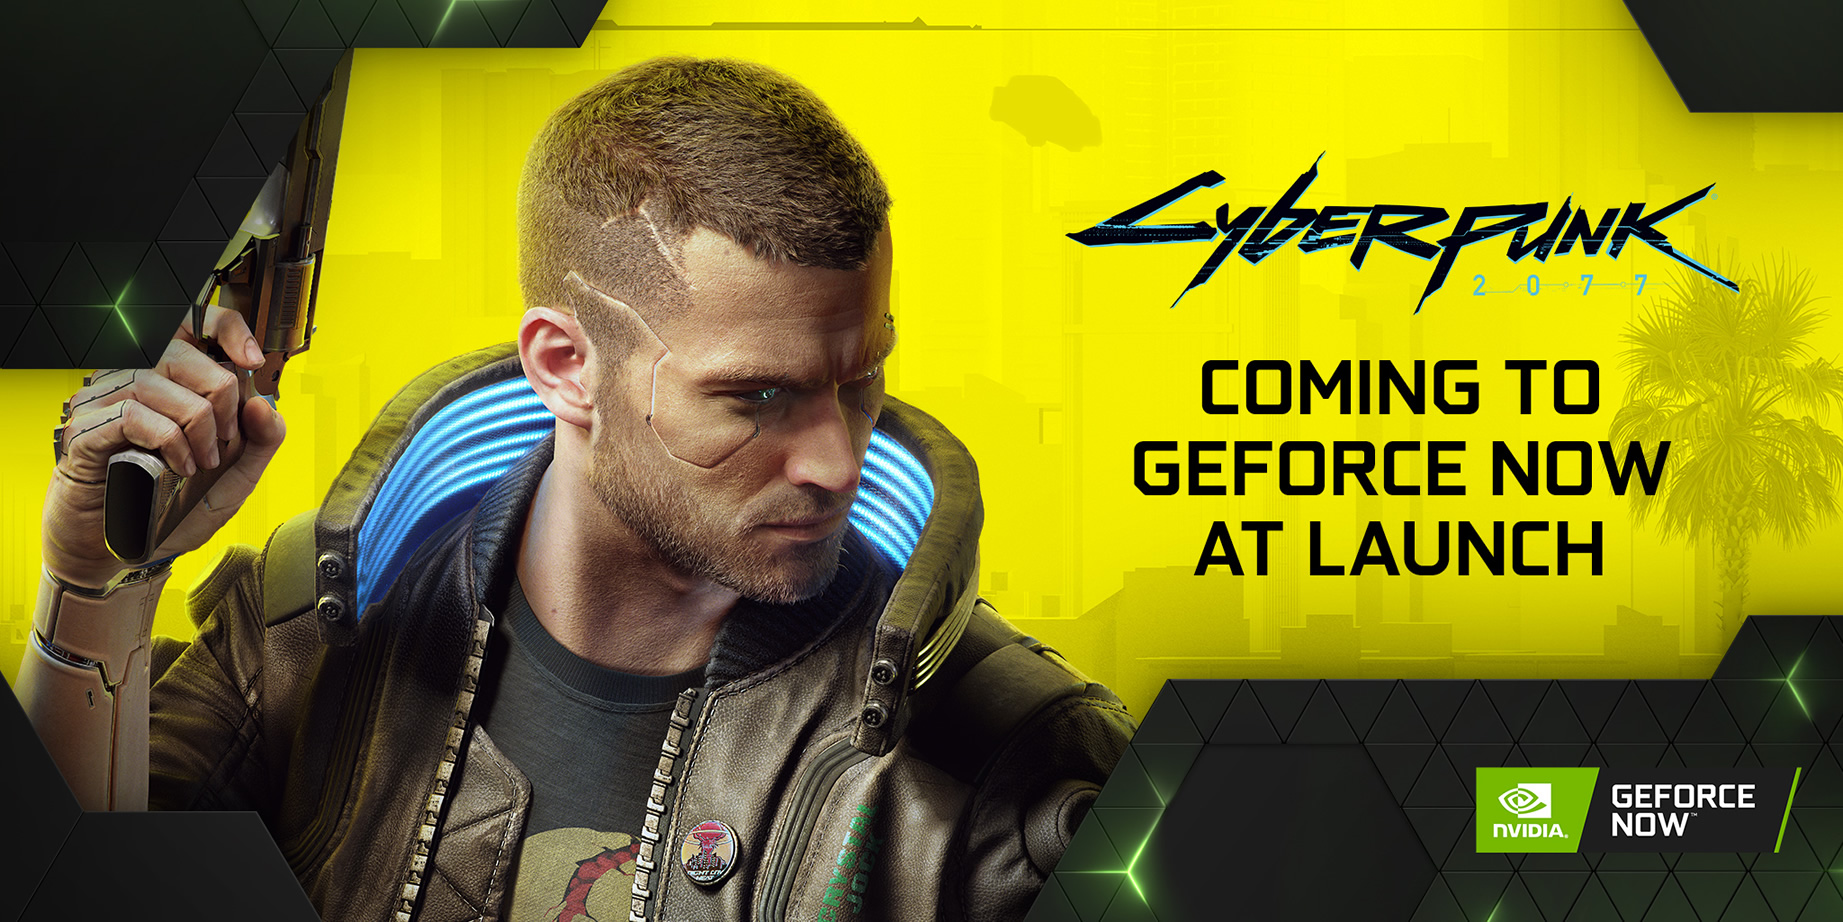 Cyberpunk 2077 kommer till GeForce NOW-plattformen samma dag som den lanseras